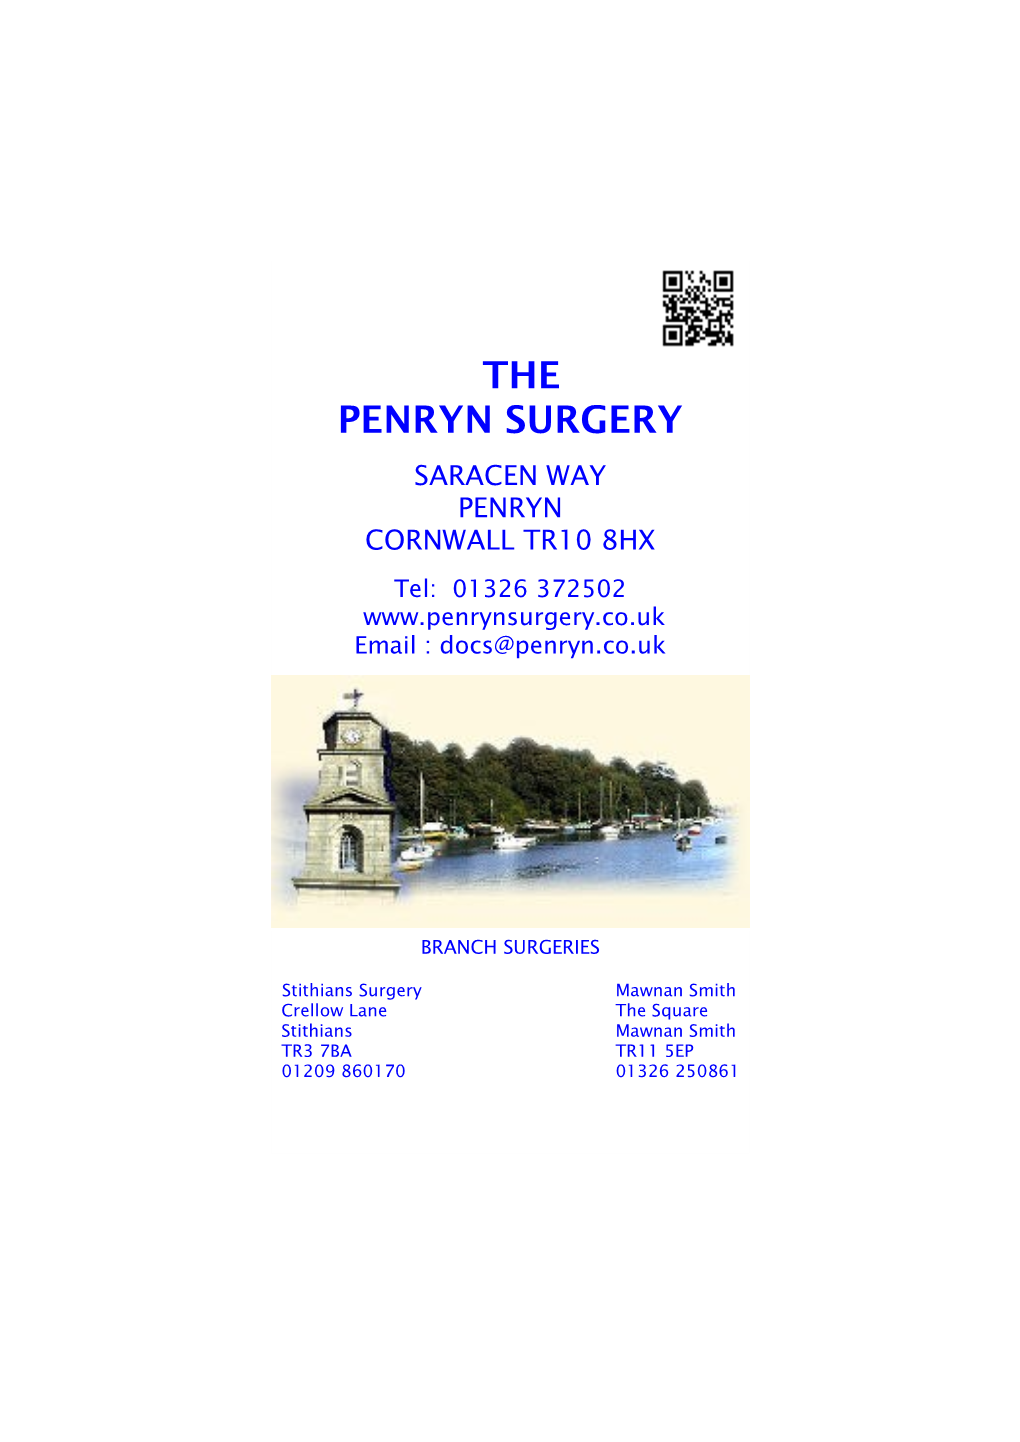 The Penryn Surgery